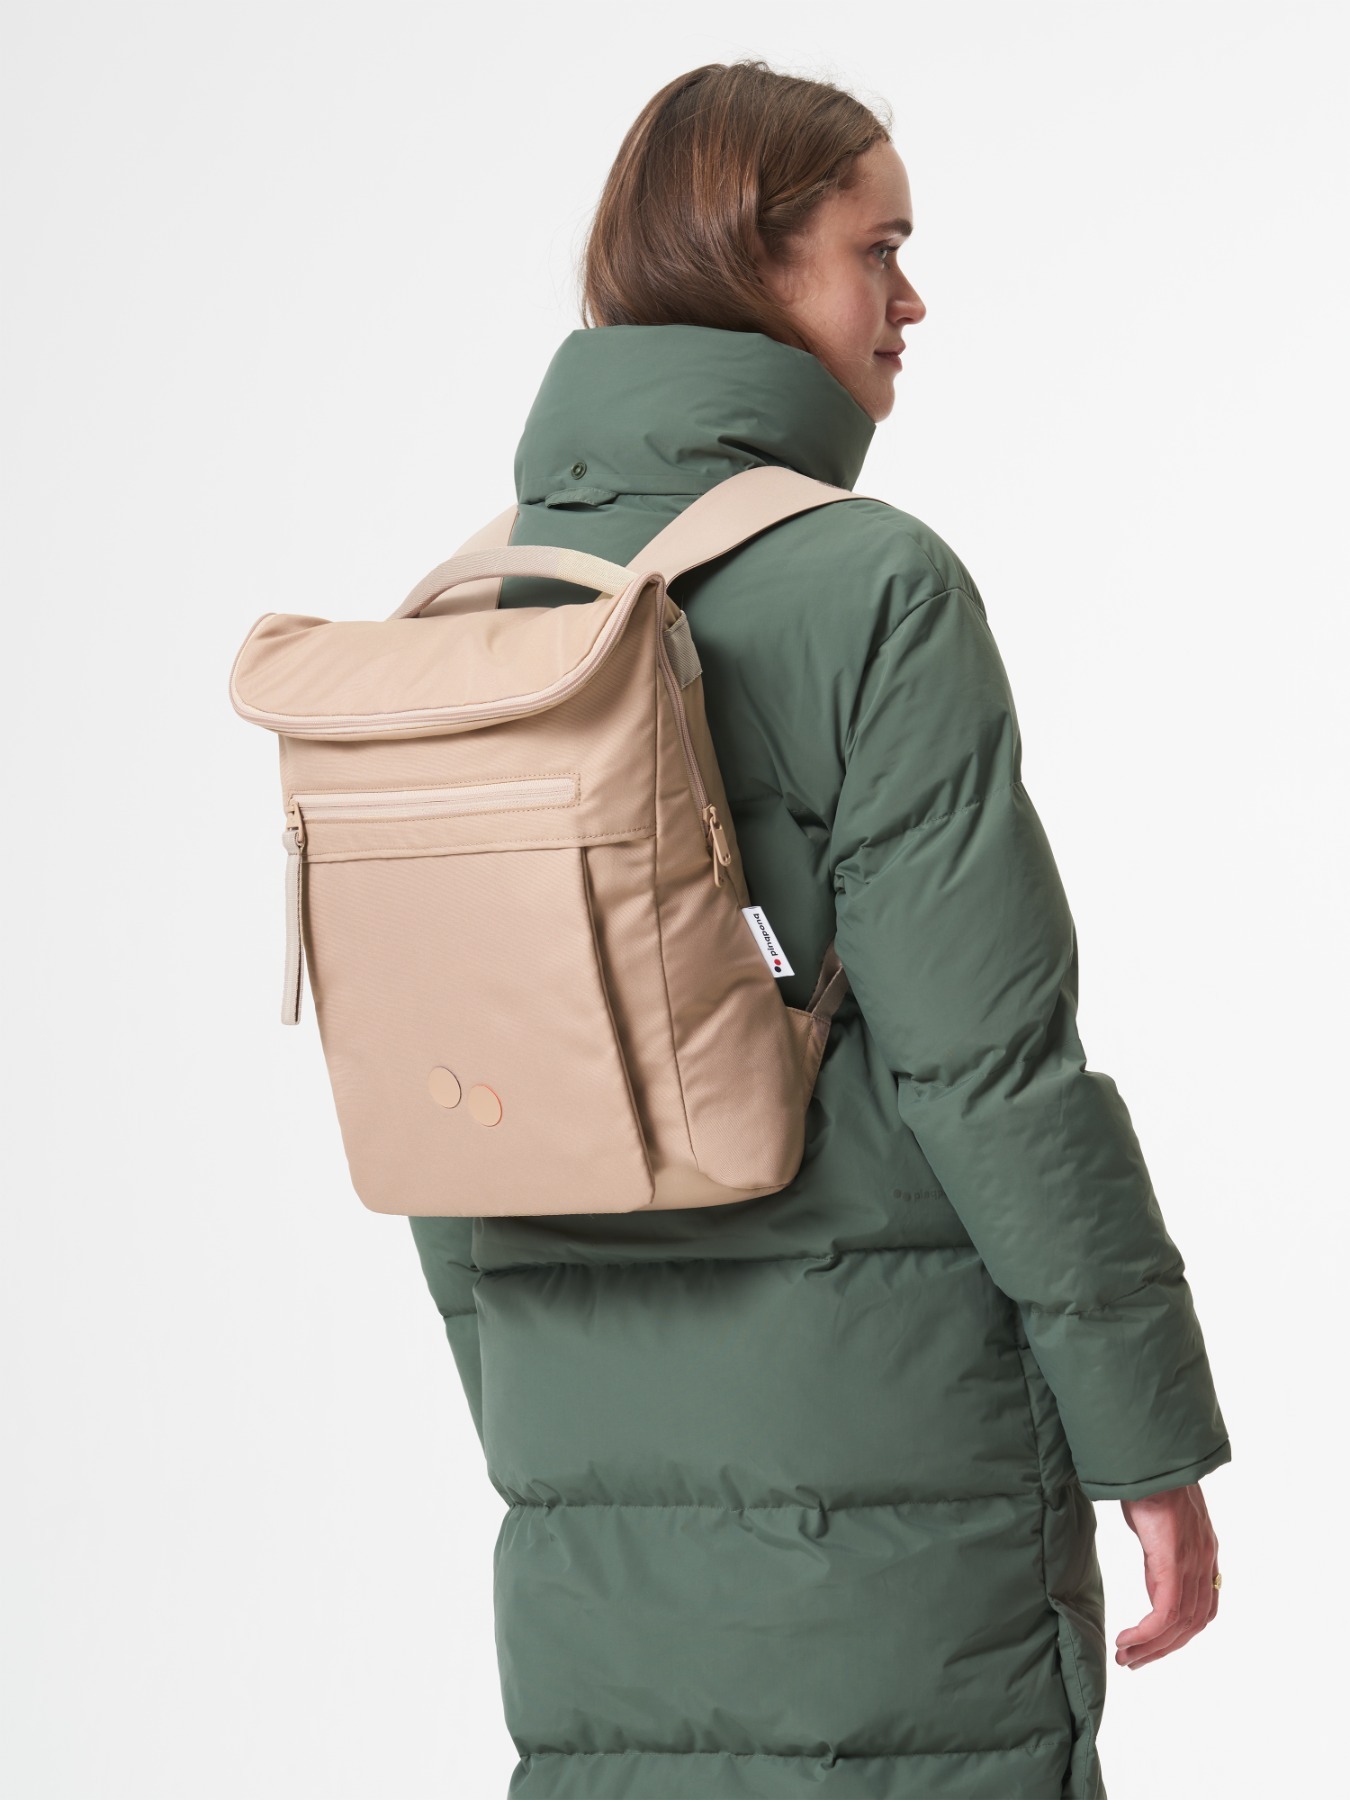 pinqponq Backpack KLAK - Caramel Khaki 10